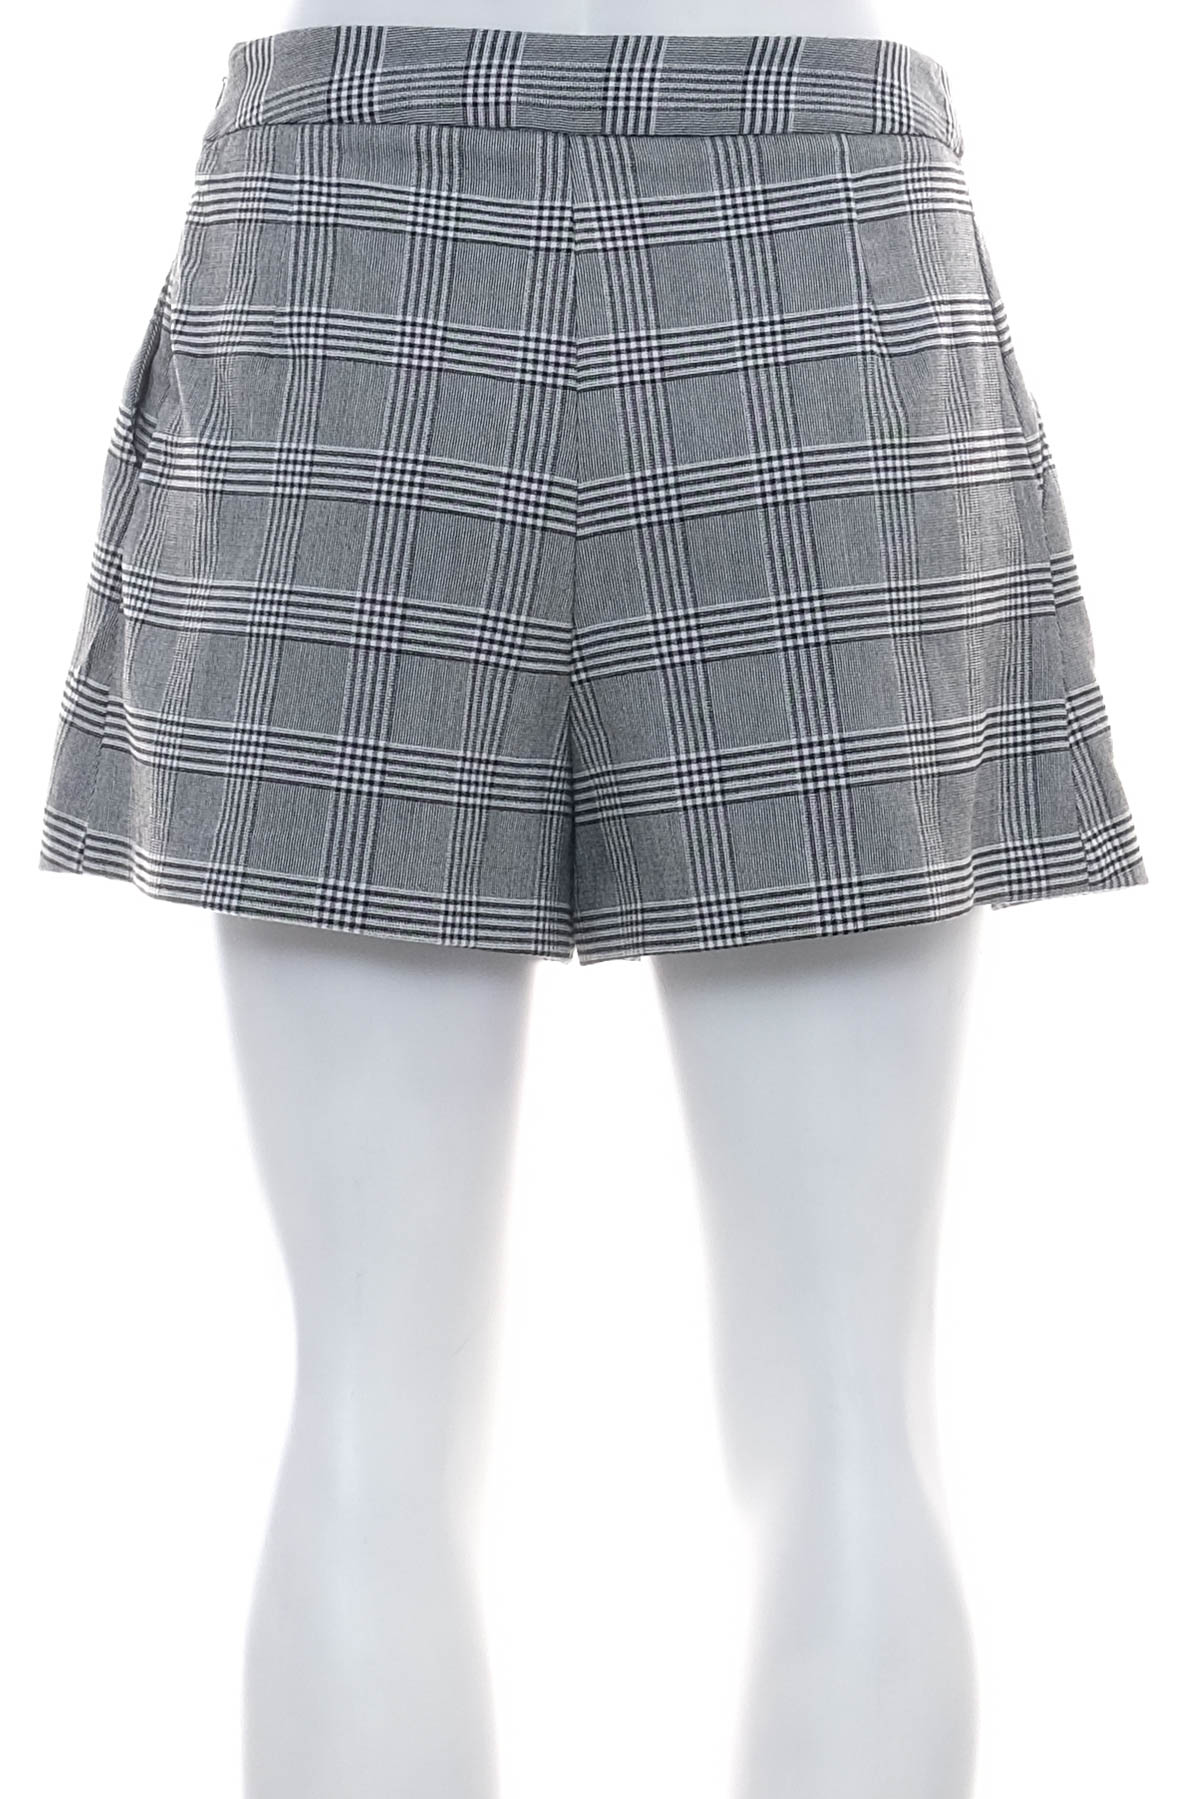 Female shorts - ZARA Woman - 1